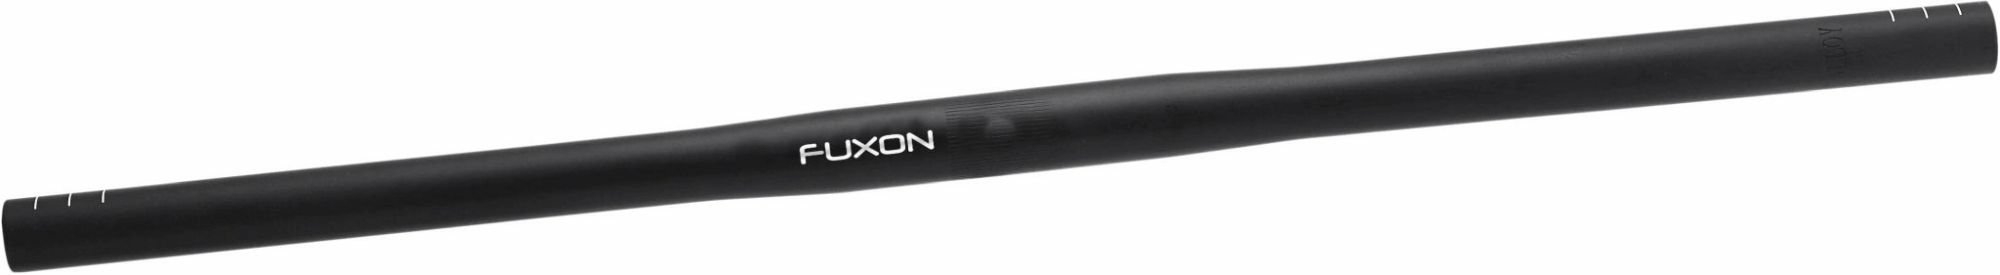 Fuxon Flat Bar Lenker 620mm, 25,4mm, schwarz schwarz